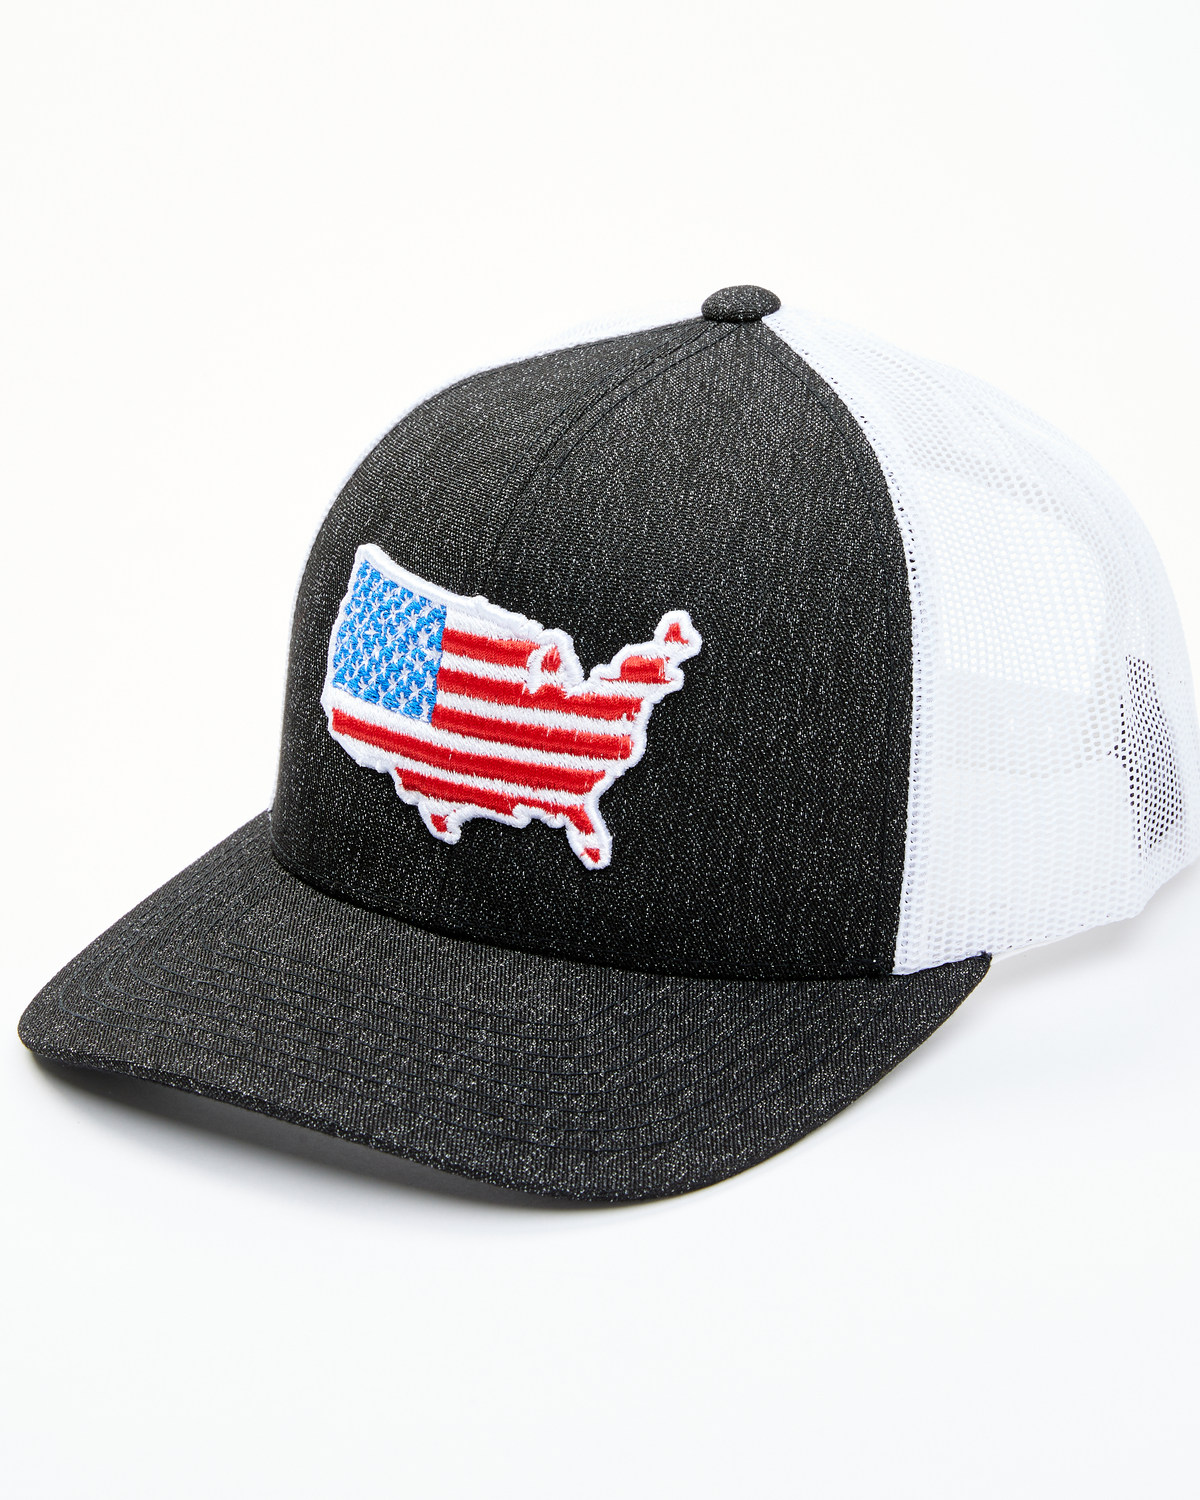 Oil Field Hats Men's Black & White American Flag US Patch Mesh-Back Ball Cap